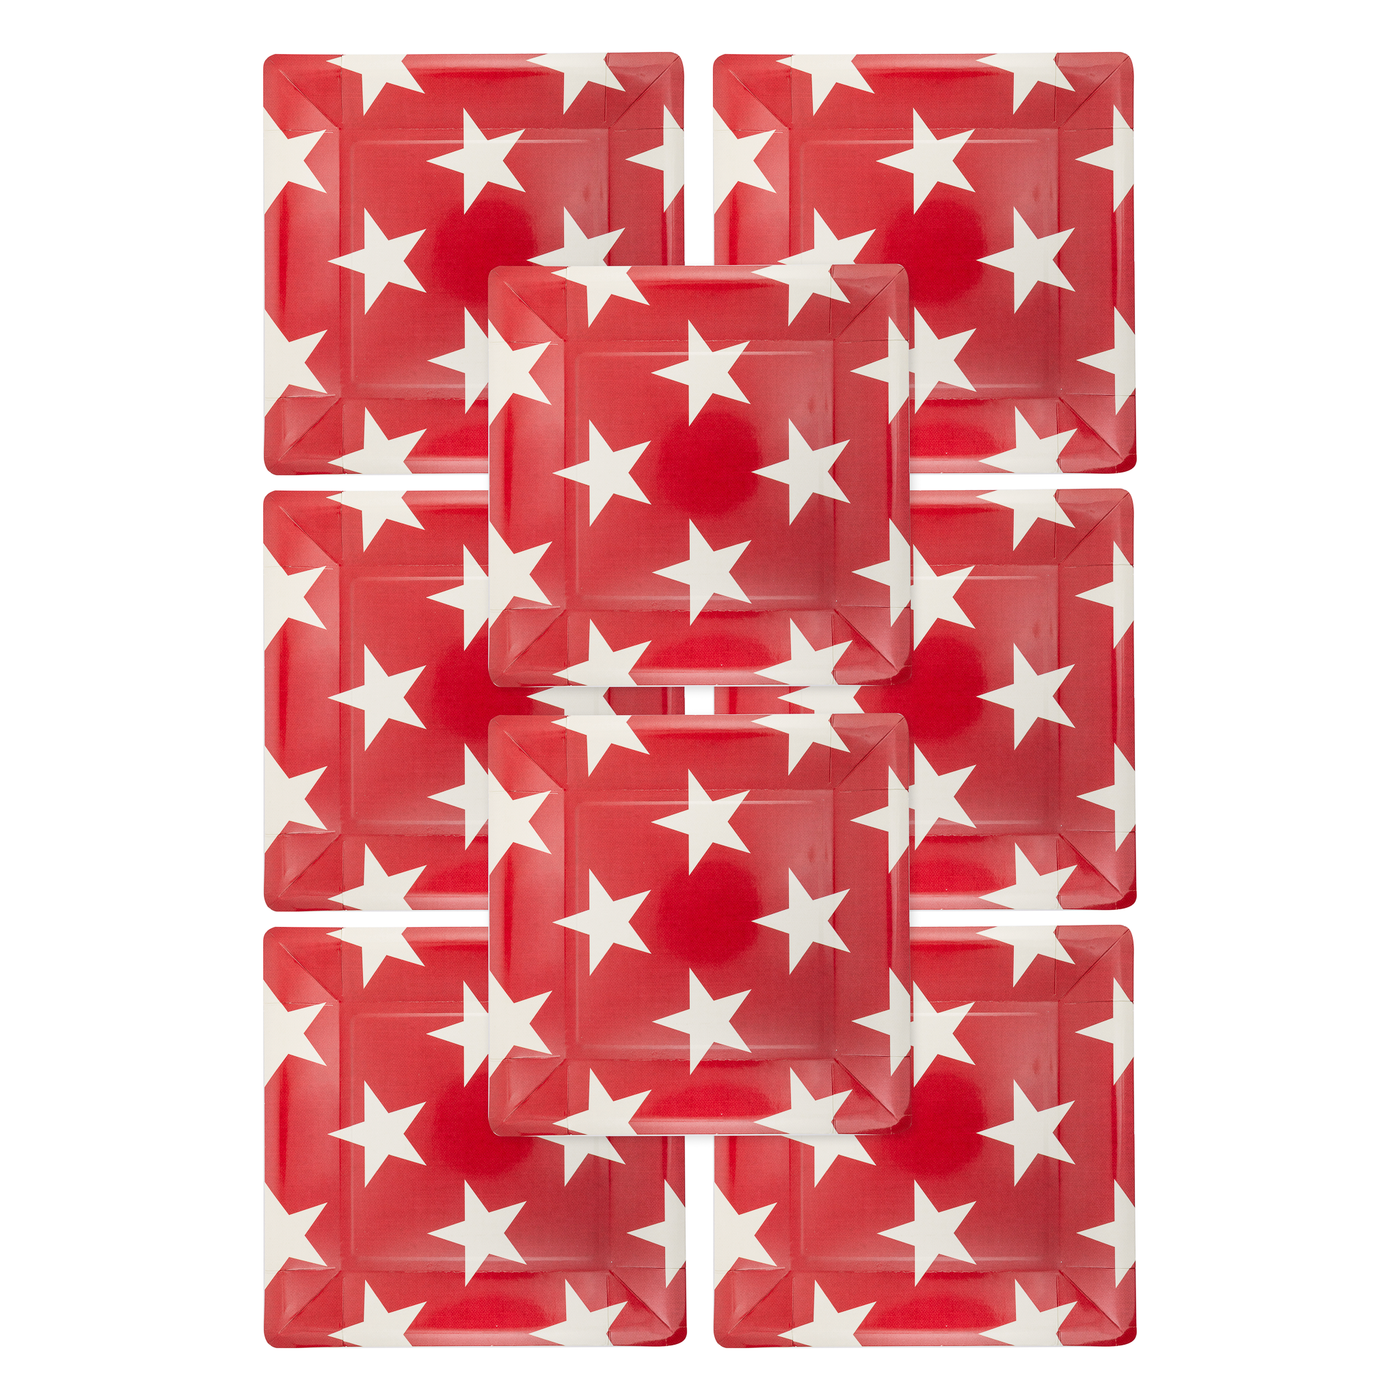 HAM1041 - Hamptons Square Red Star Paper Plate